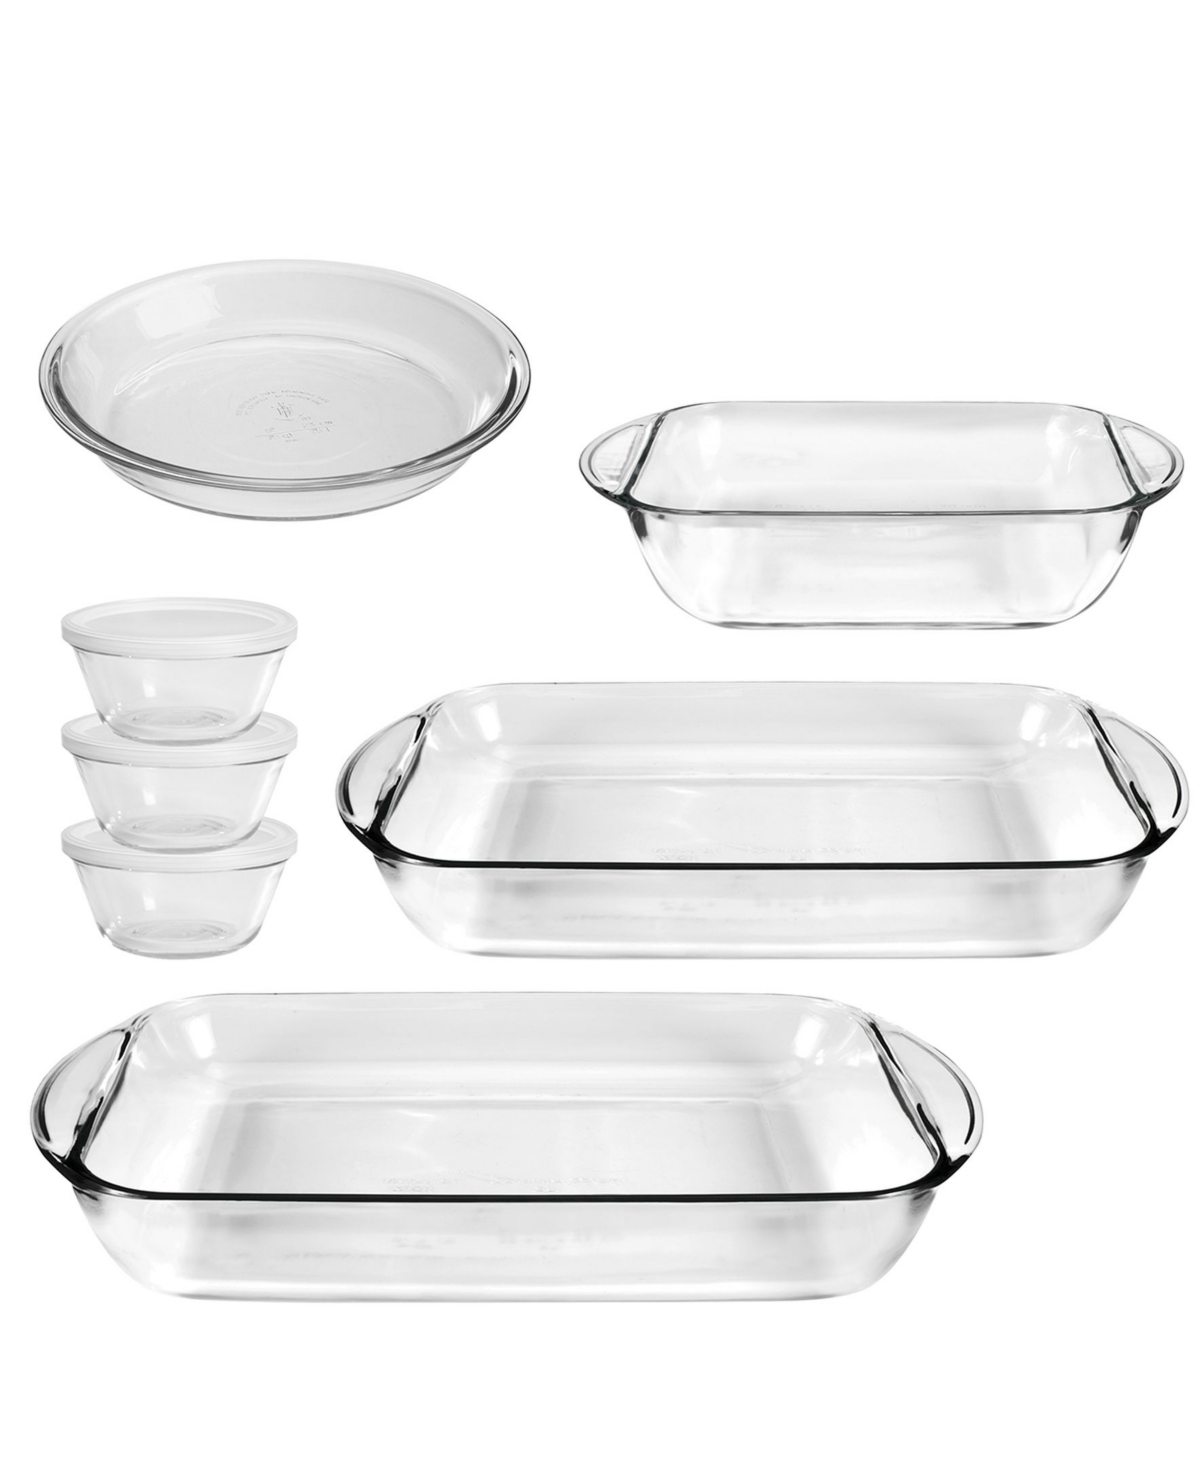 Anchor Hocking 10-pc. Essentials Glass Bakeware Set In Clear